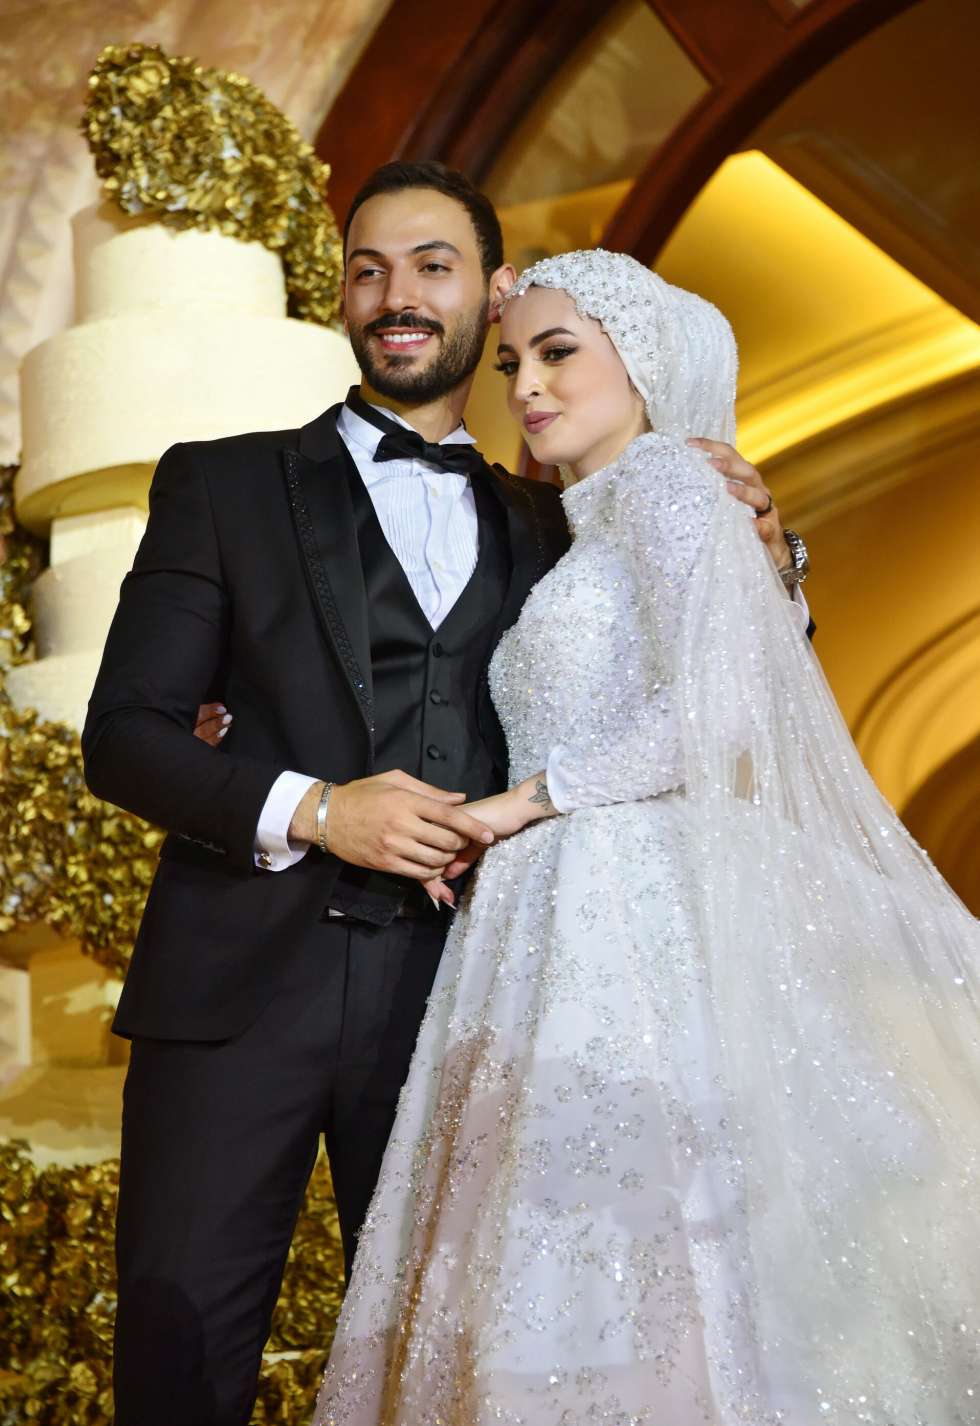 Jana and Mohammed's Wedding in Lebanon | Arabia Weddings